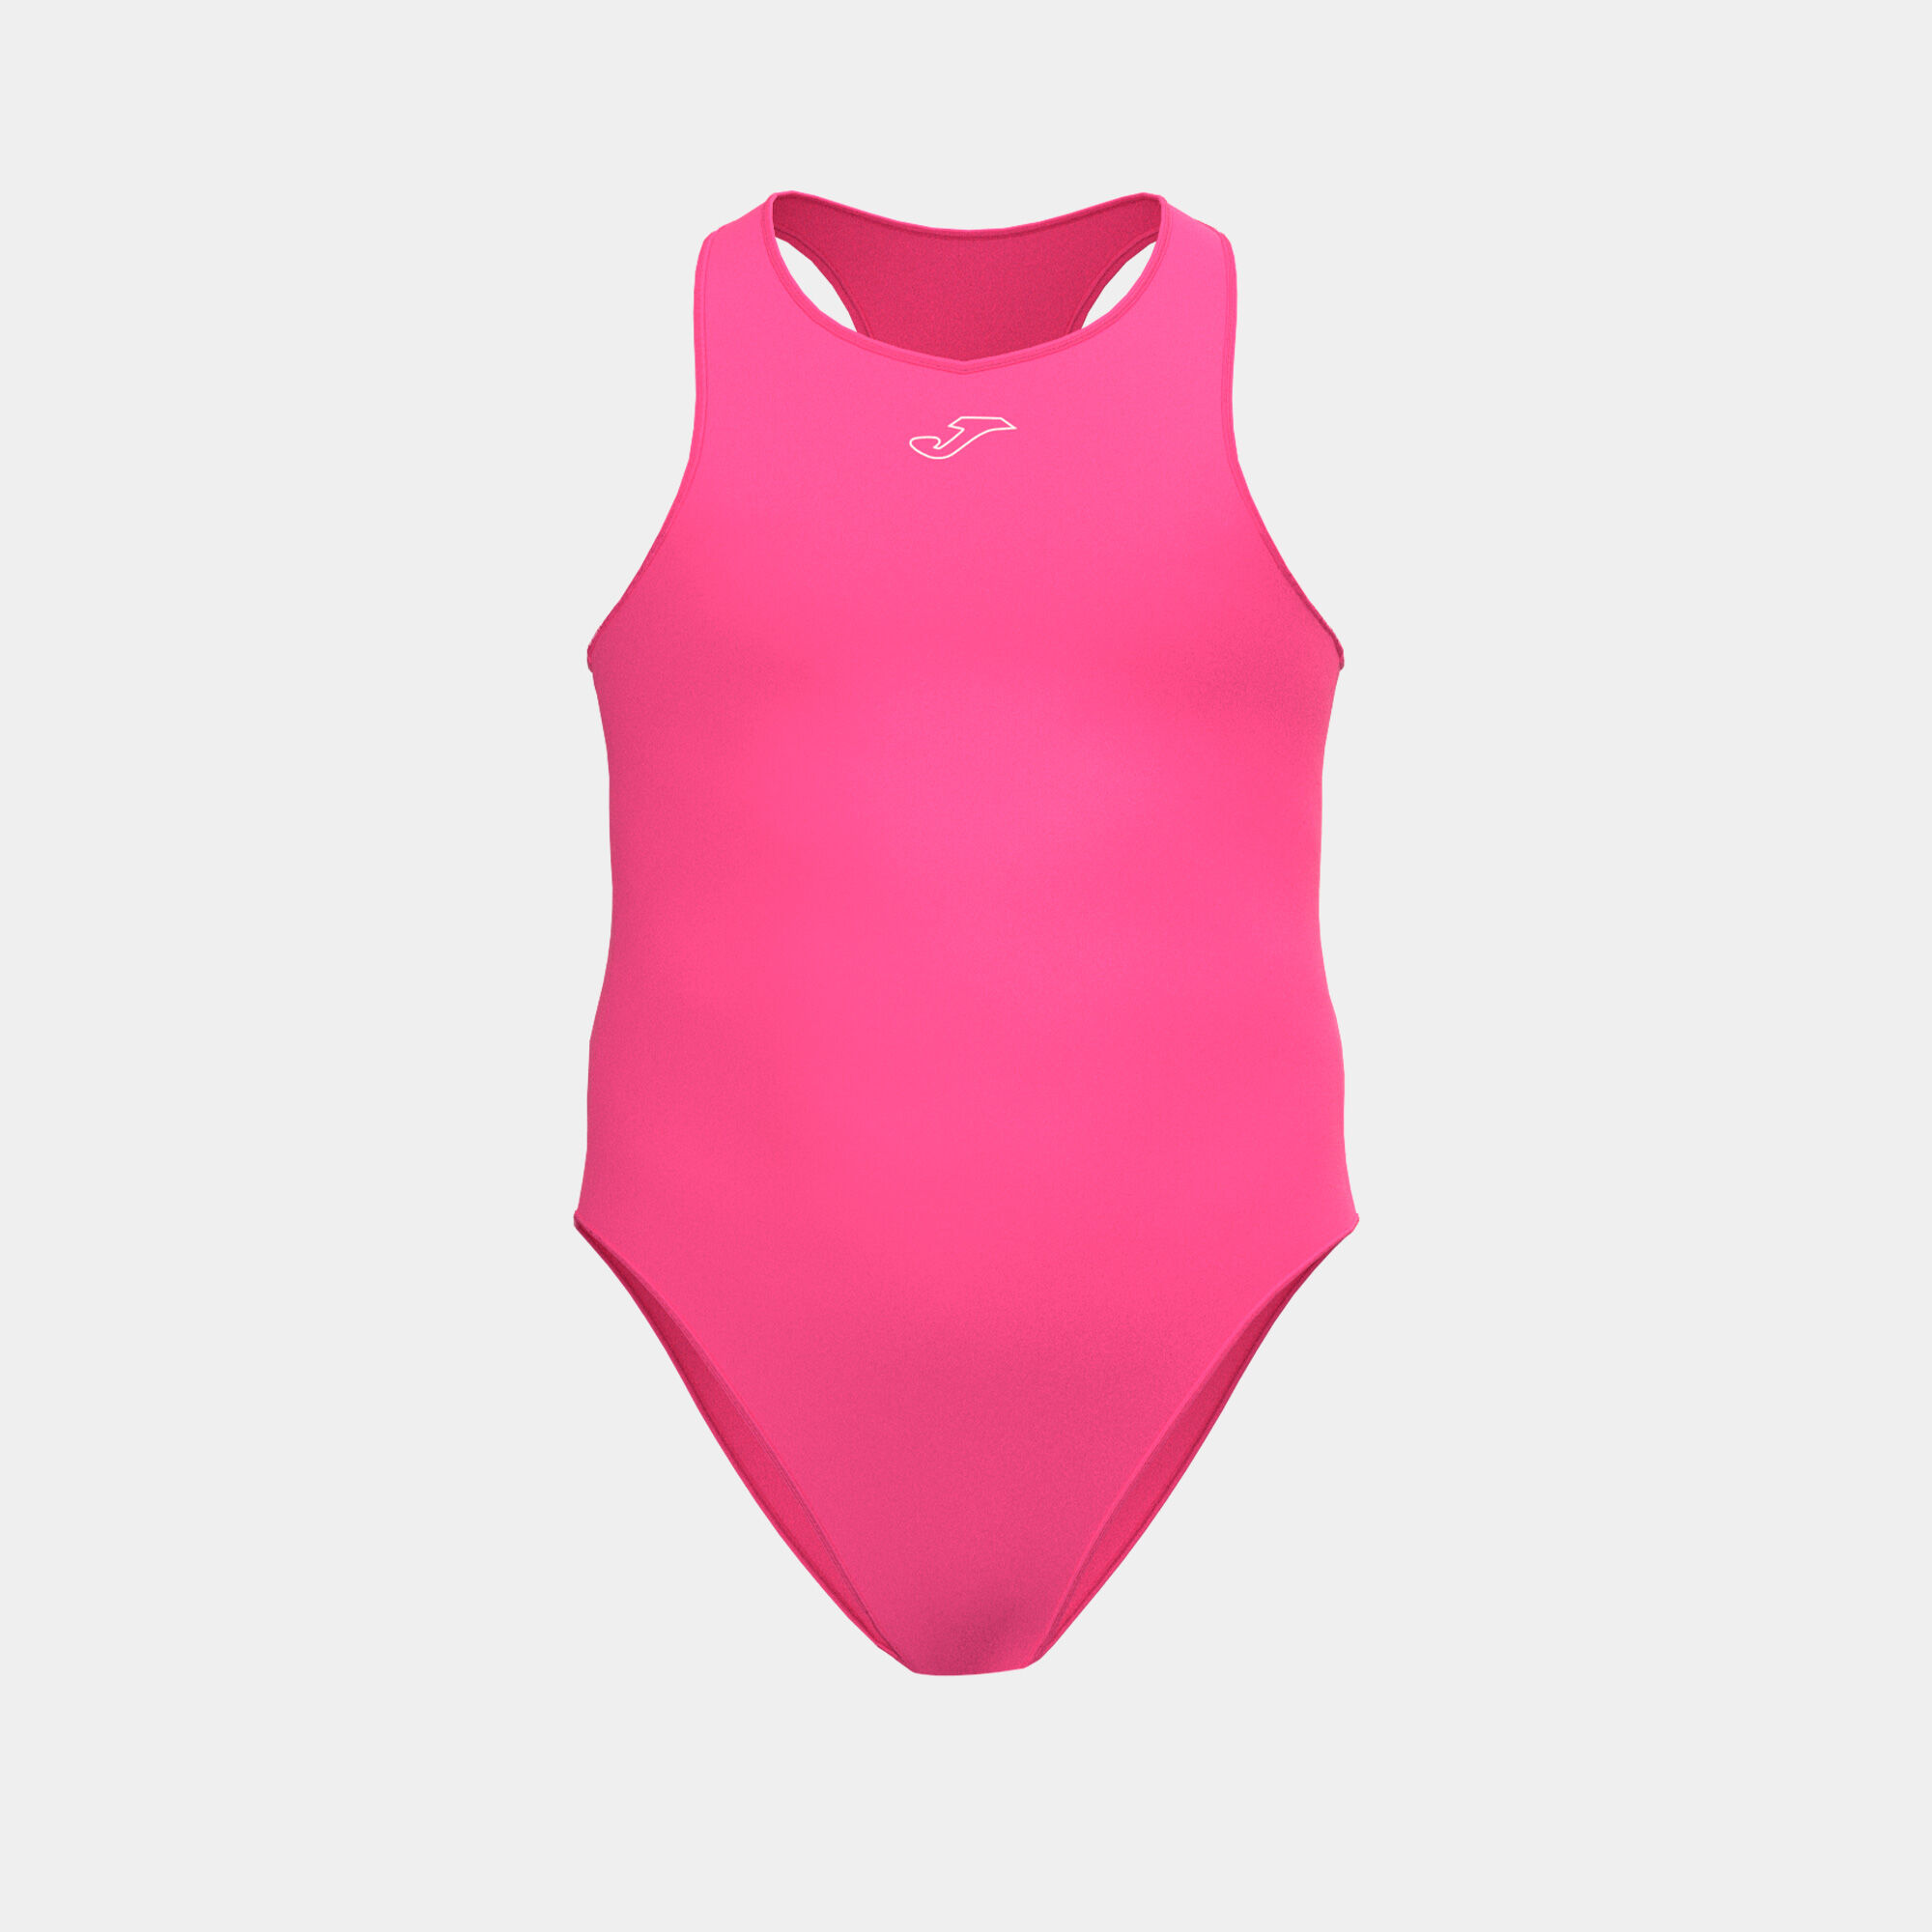 Costum de baie fete Splash roz fosforescent